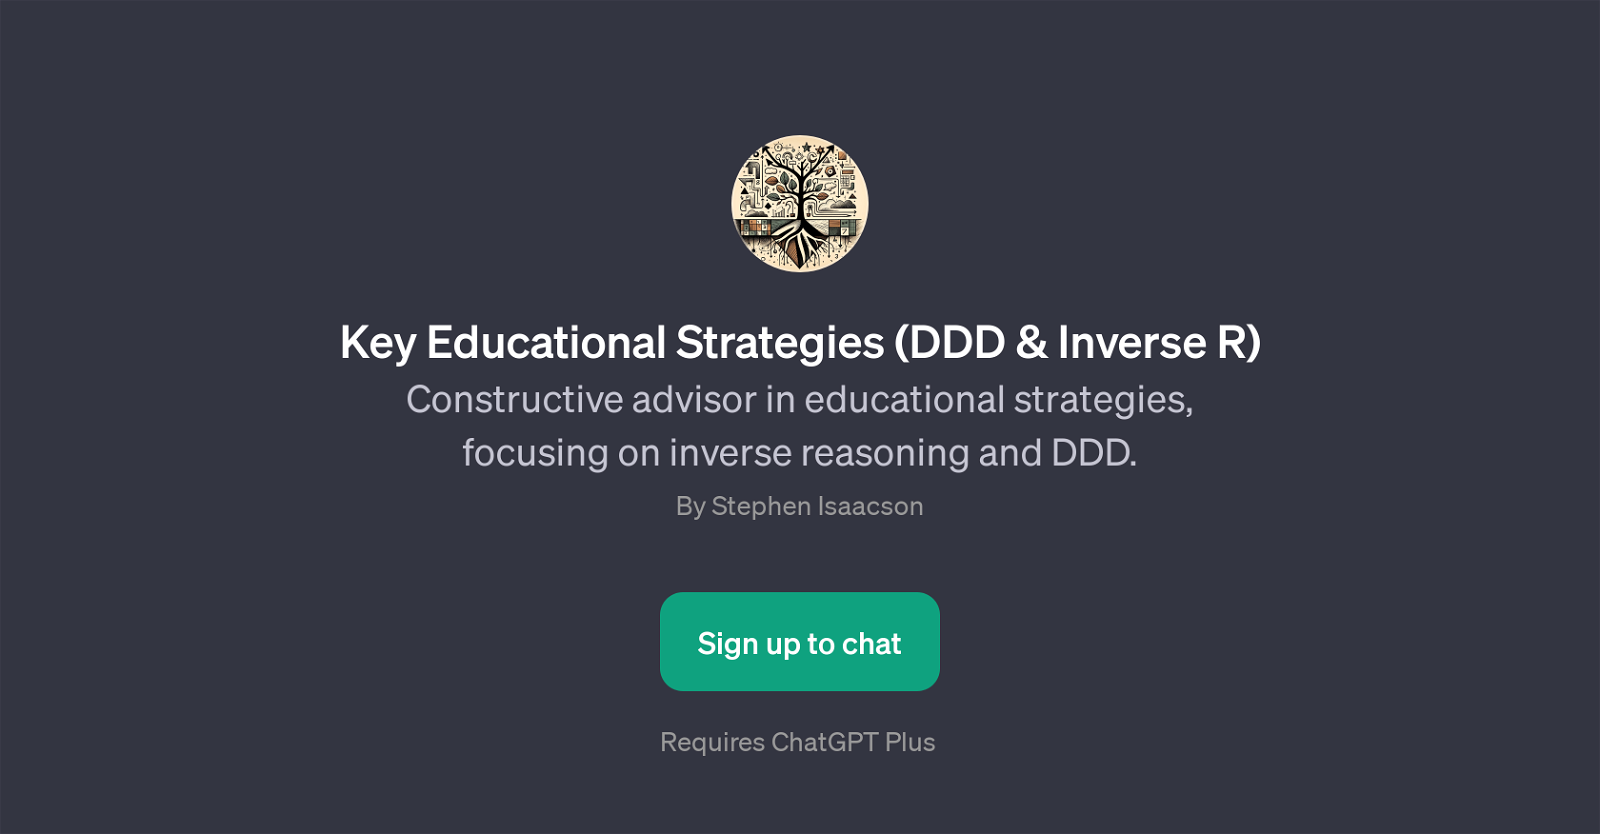 Key Educational Strategies (DDD & Inverse R) website